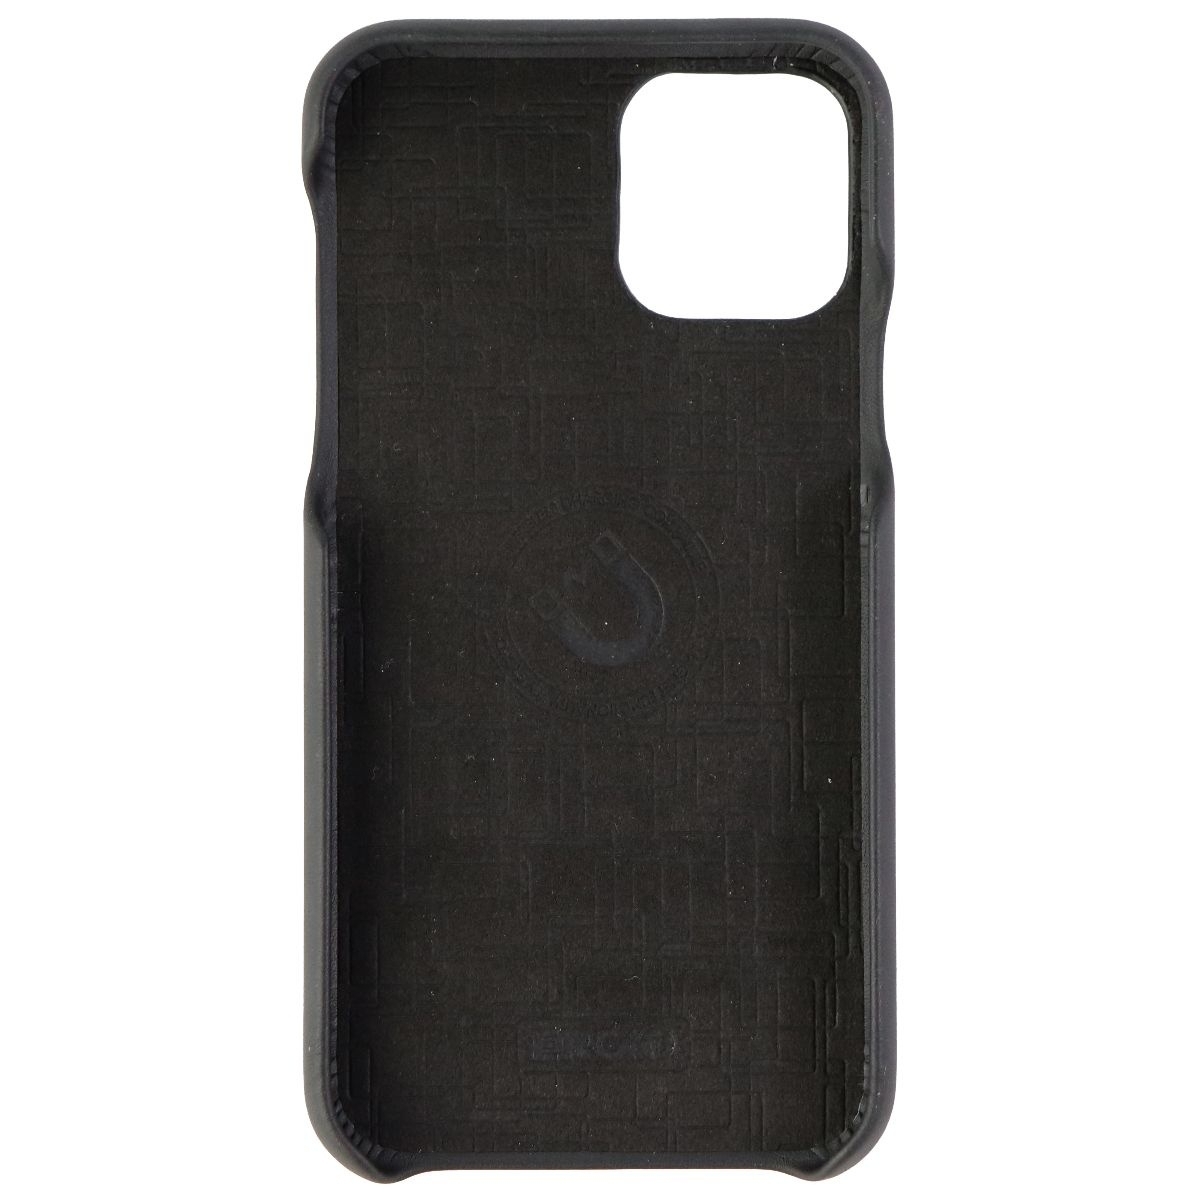 ERCKO 2 In 1 Slim Magnet Case & Wallet For IPhone 11 Pro - Black